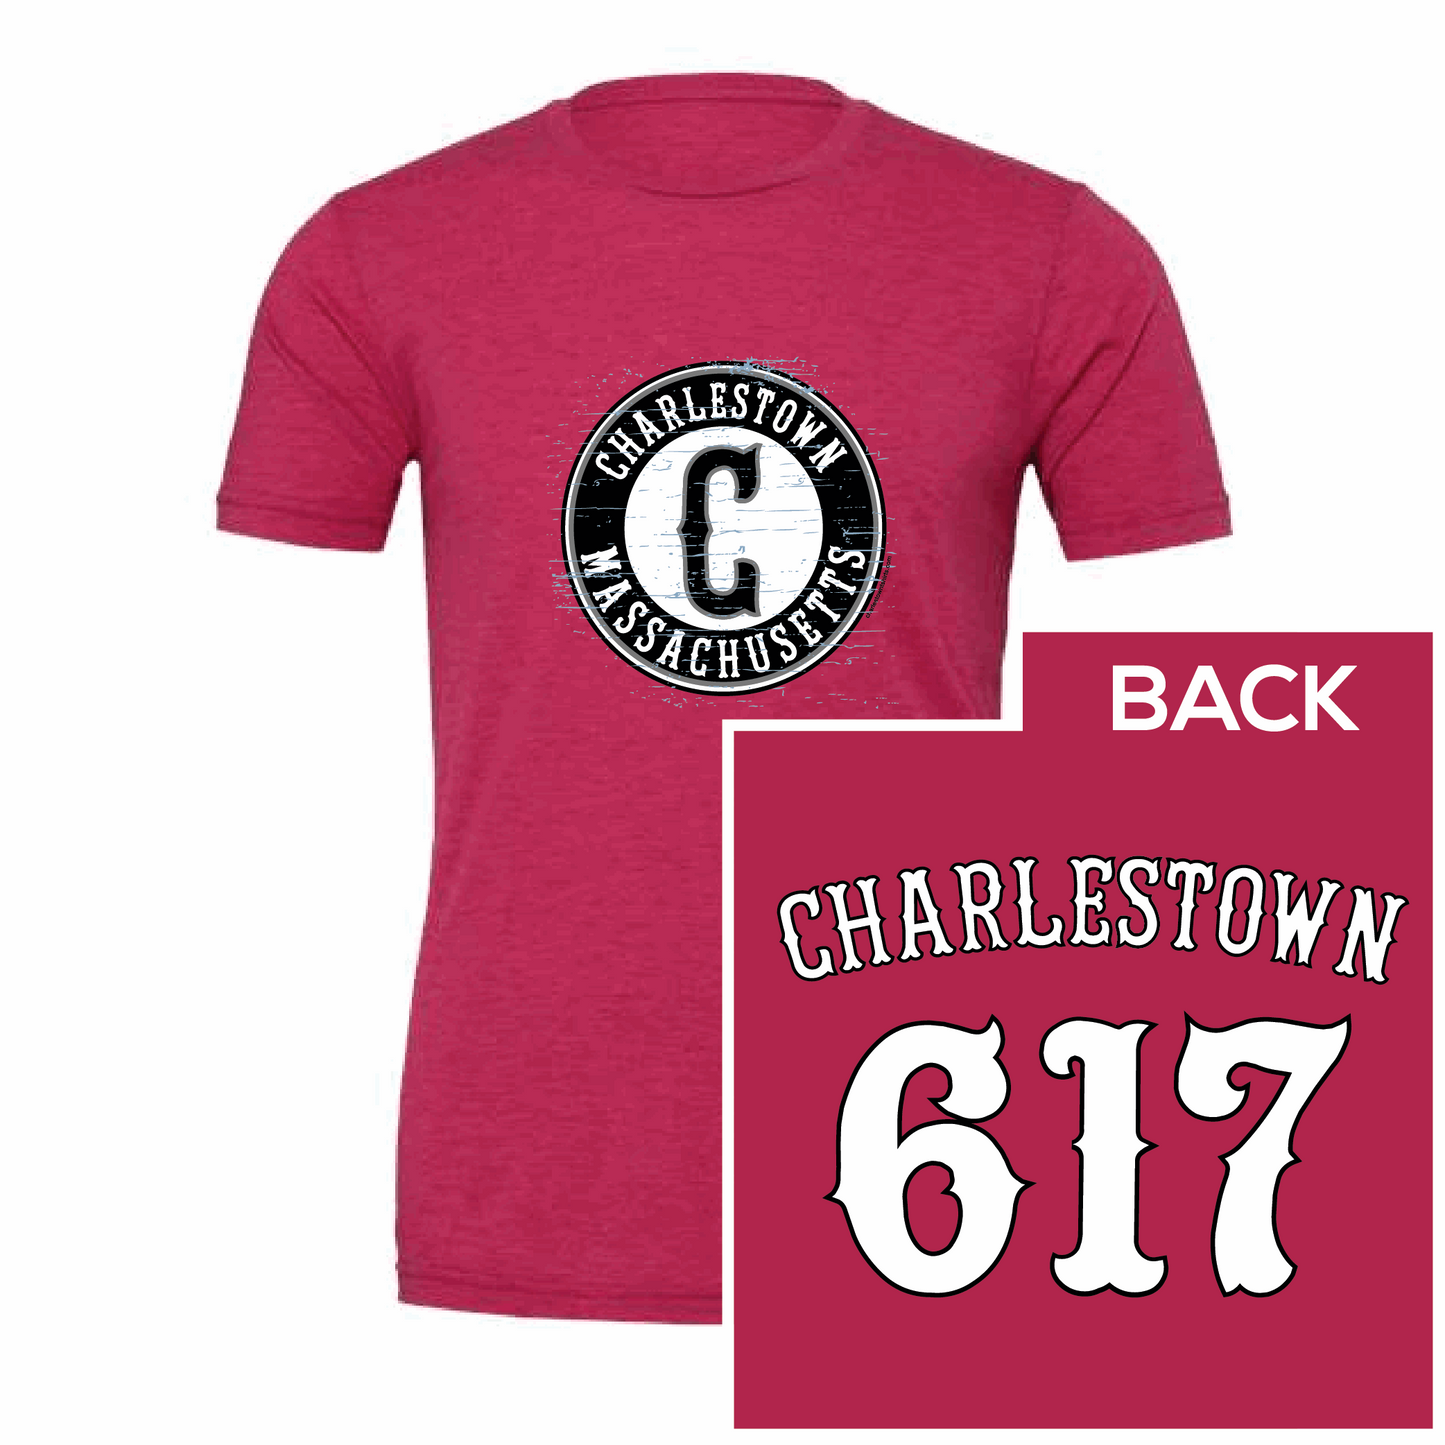 Charlestown 617 Tee My City Gear